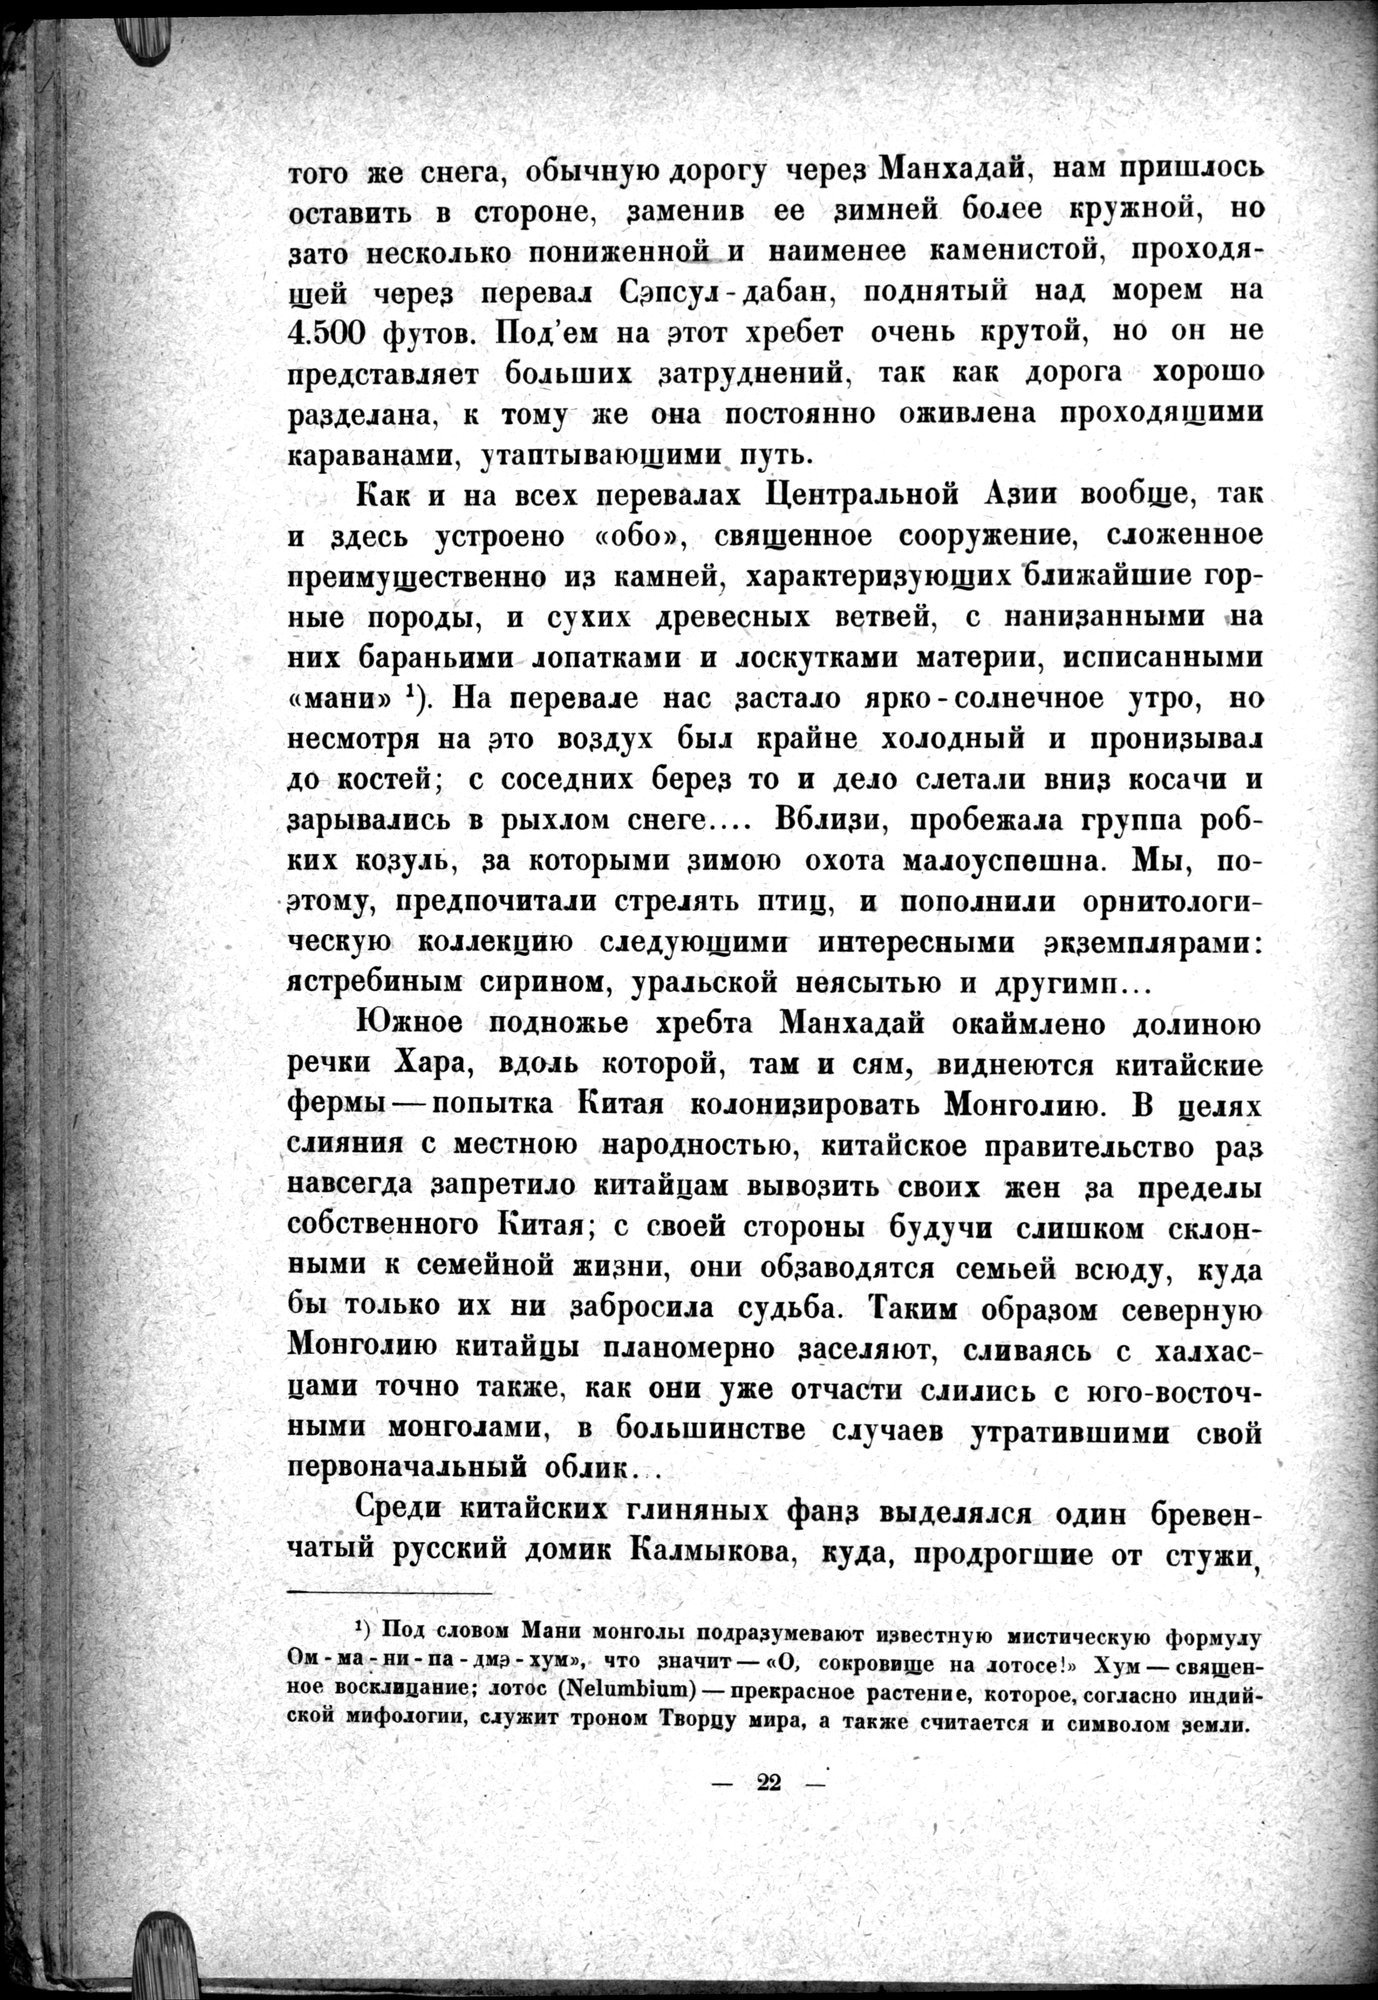 Mongoliya i Amdo i mertby gorod Khara-Khoto : vol.1 / Page 38 (Grayscale High Resolution Image)